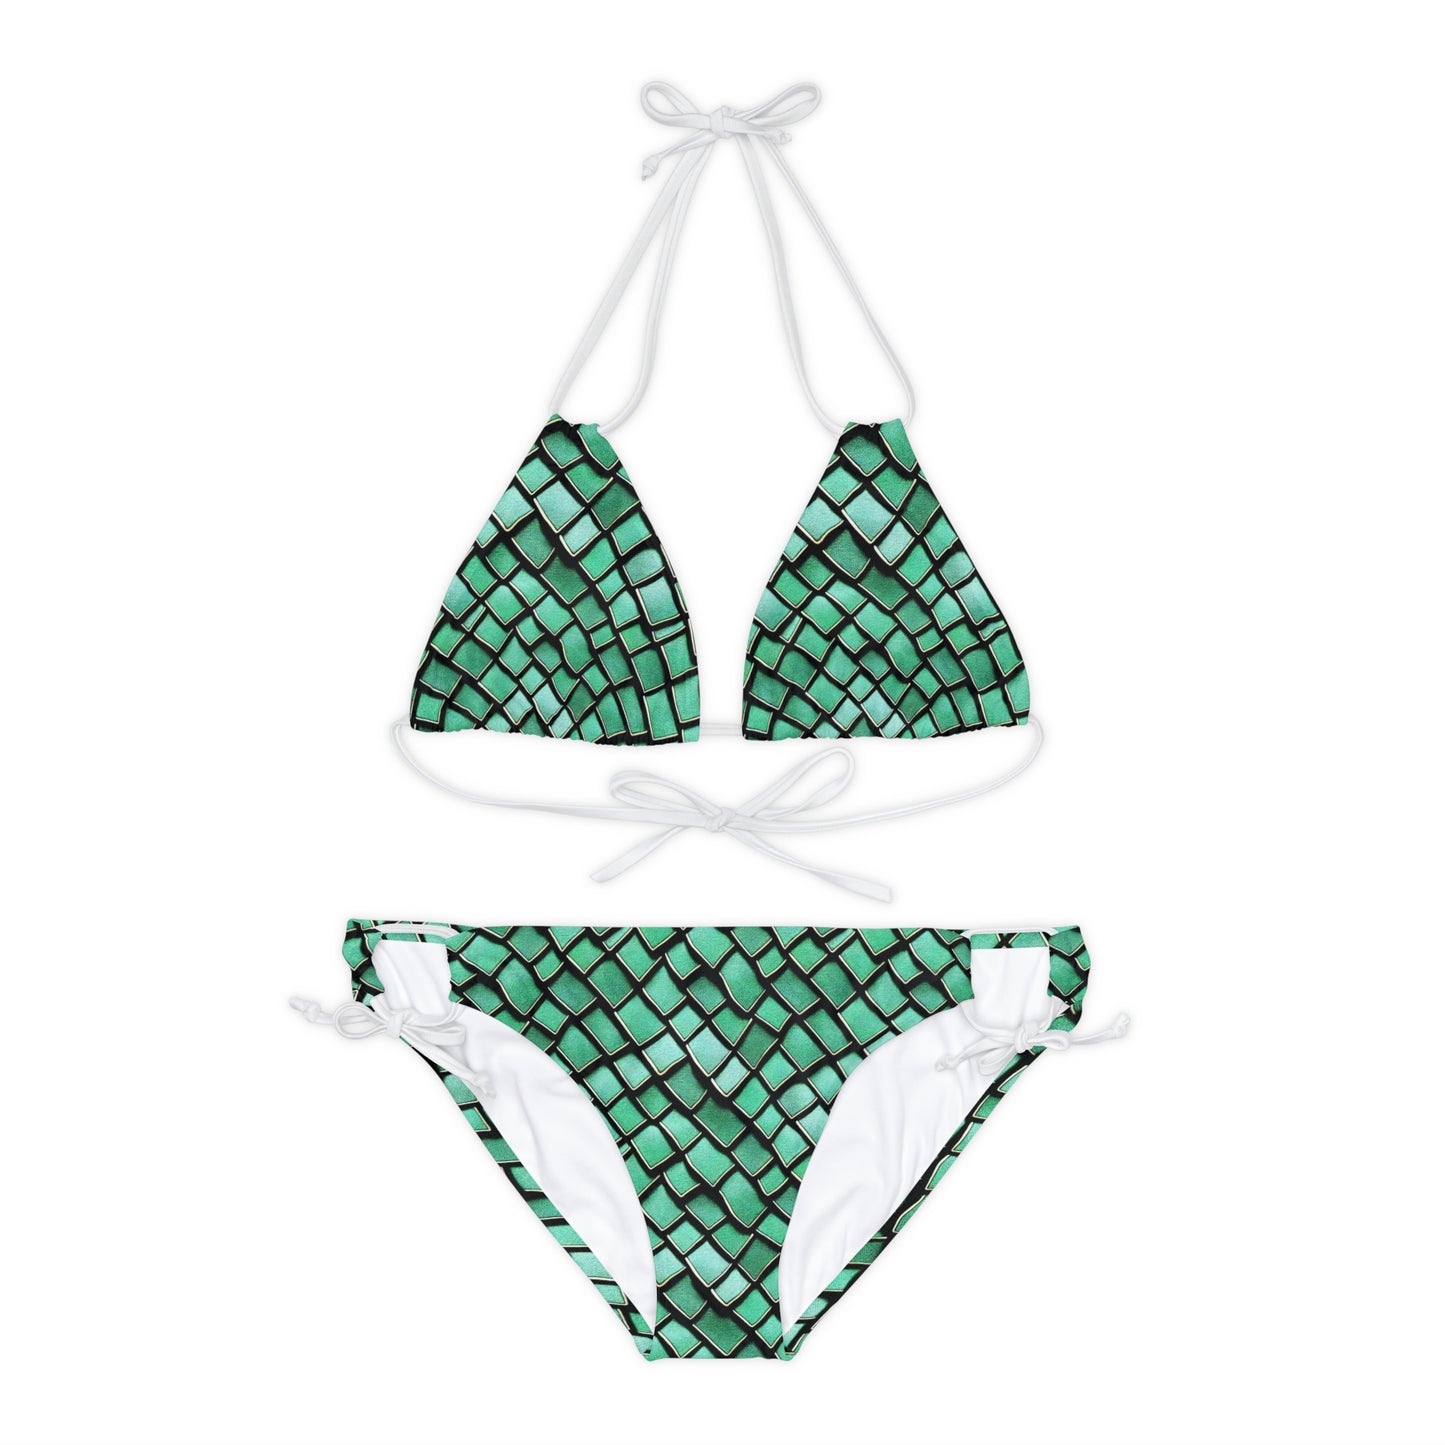 Green Dragon Scales Strappy Bikini Set, Ocean Inspired Mermaid Design, Hit the Beach or Pool in Trendy Style, Gift Woman Girl Mom Beachwear